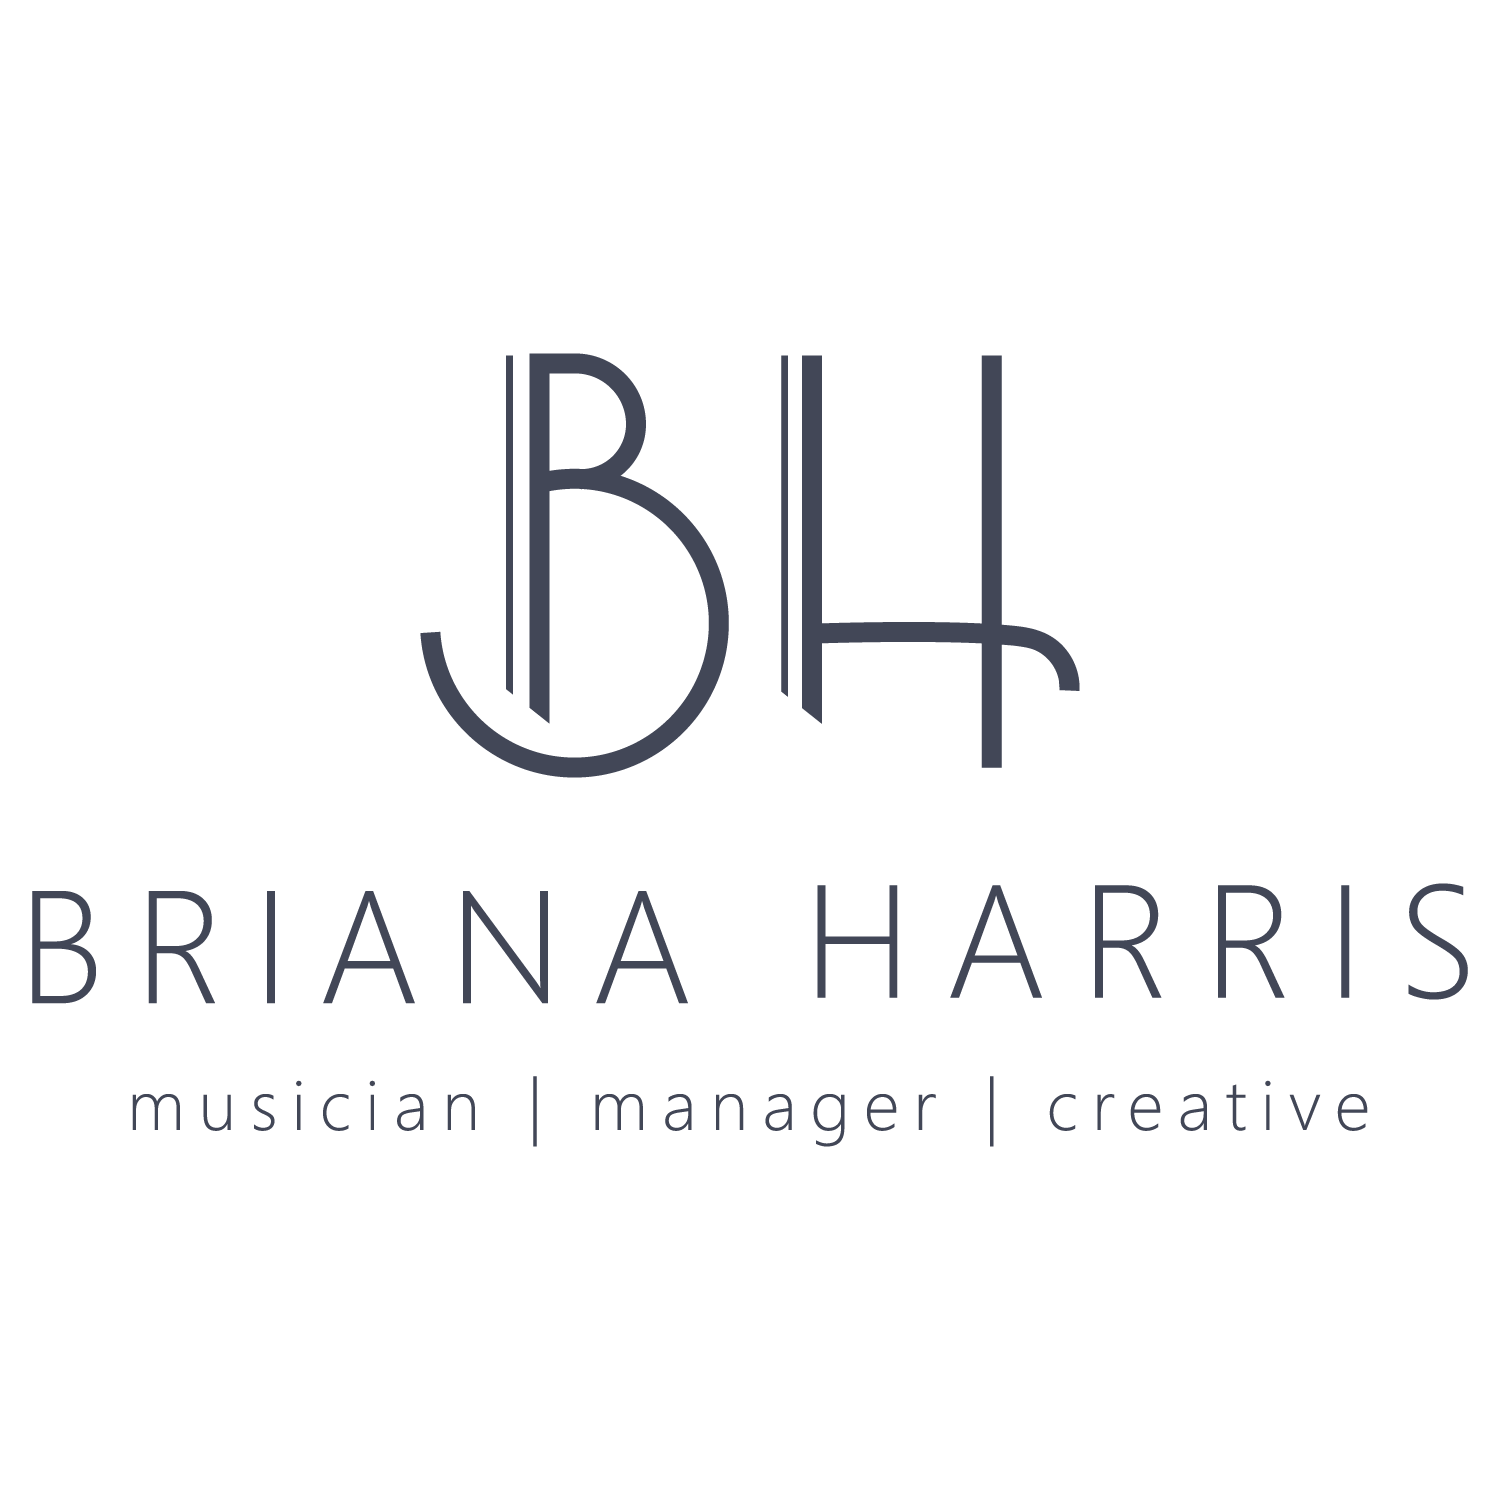 Briana Harris - Musician | Manager | Creative